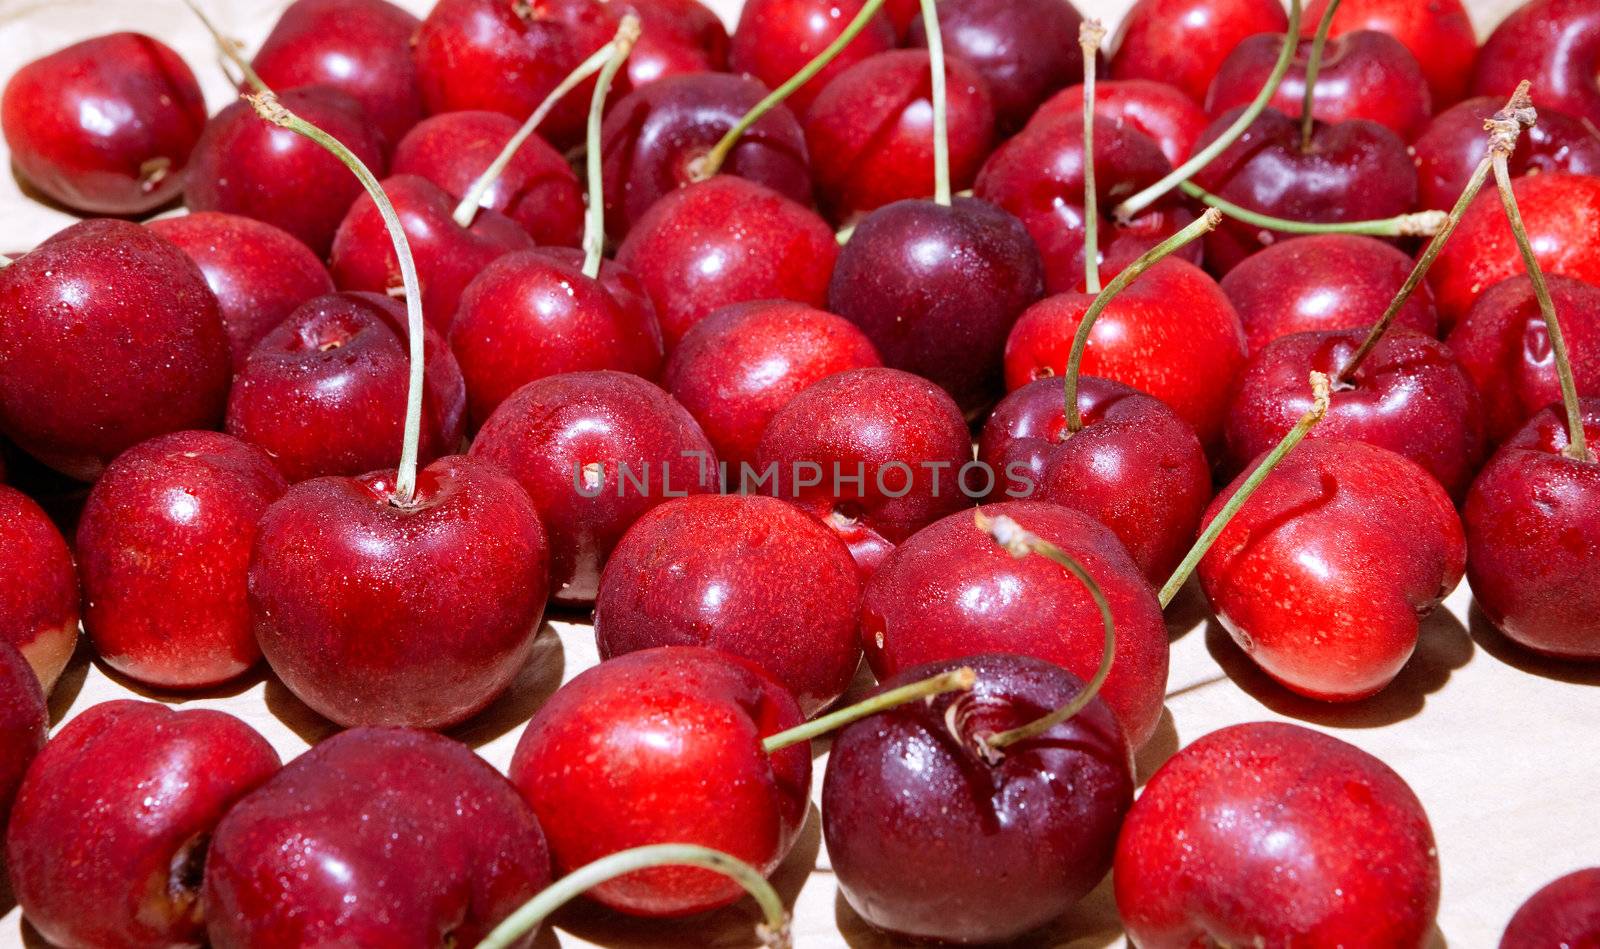 Still life with tasty cherries